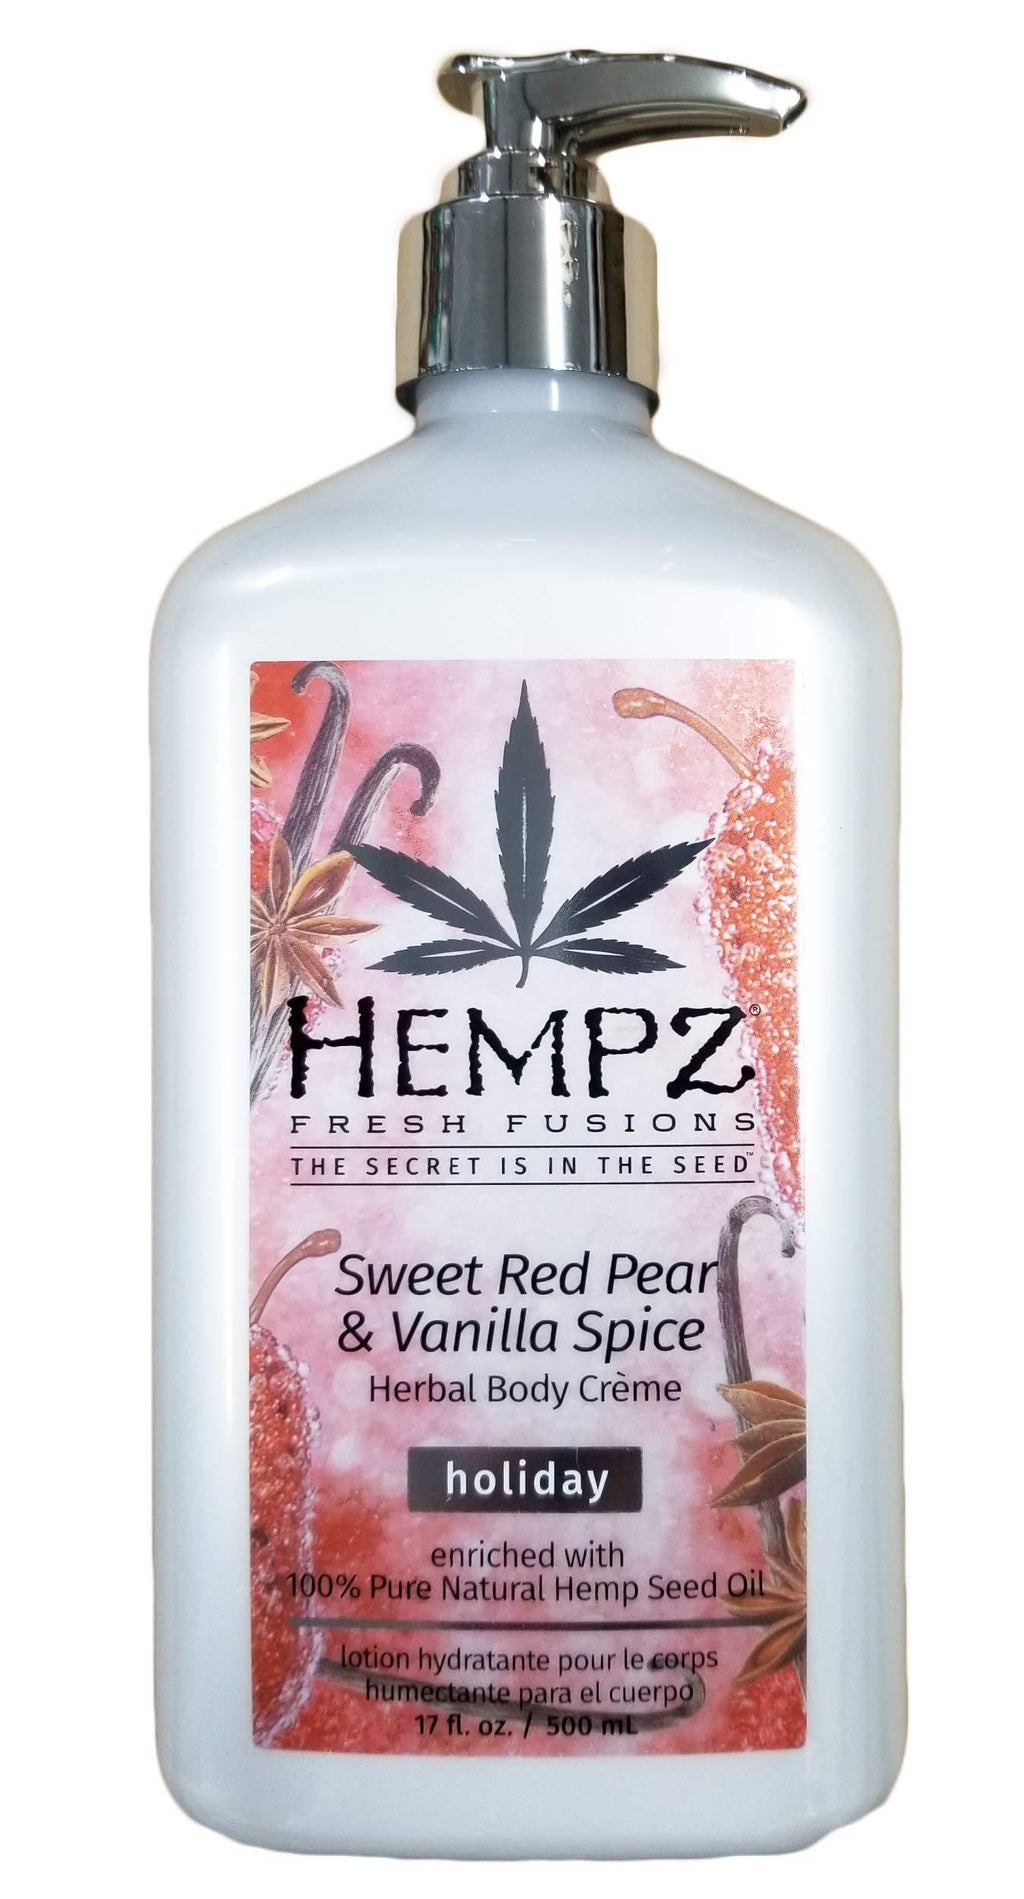 [Australia] - Hempz Sweet Red Pear & Vanilla Spice Holiday Body Creme - 17 oz 